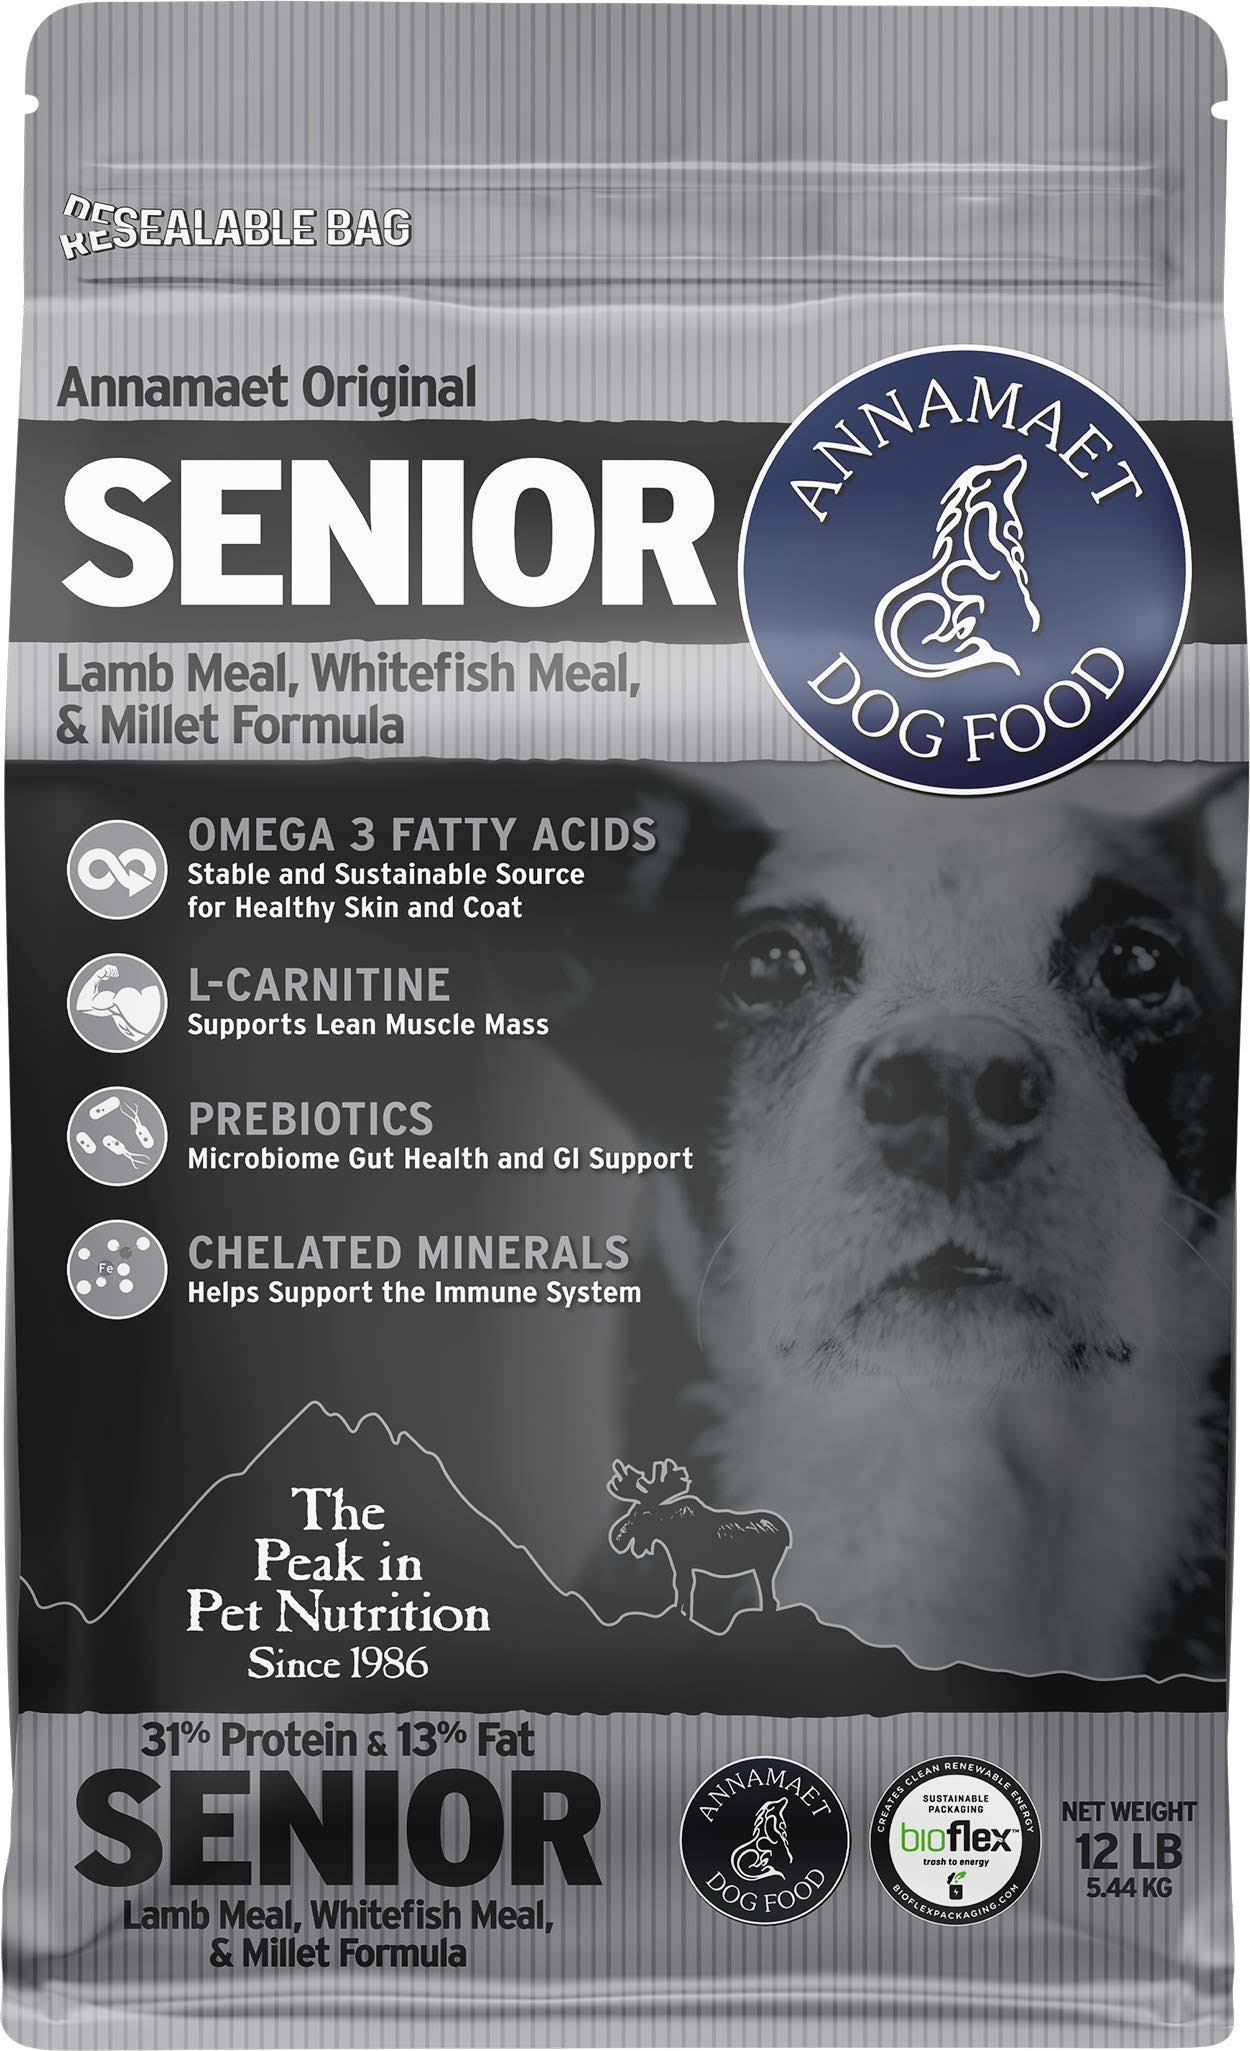 Annamaet Original 31% Senior Dry Dog Food, 12-lb Bag